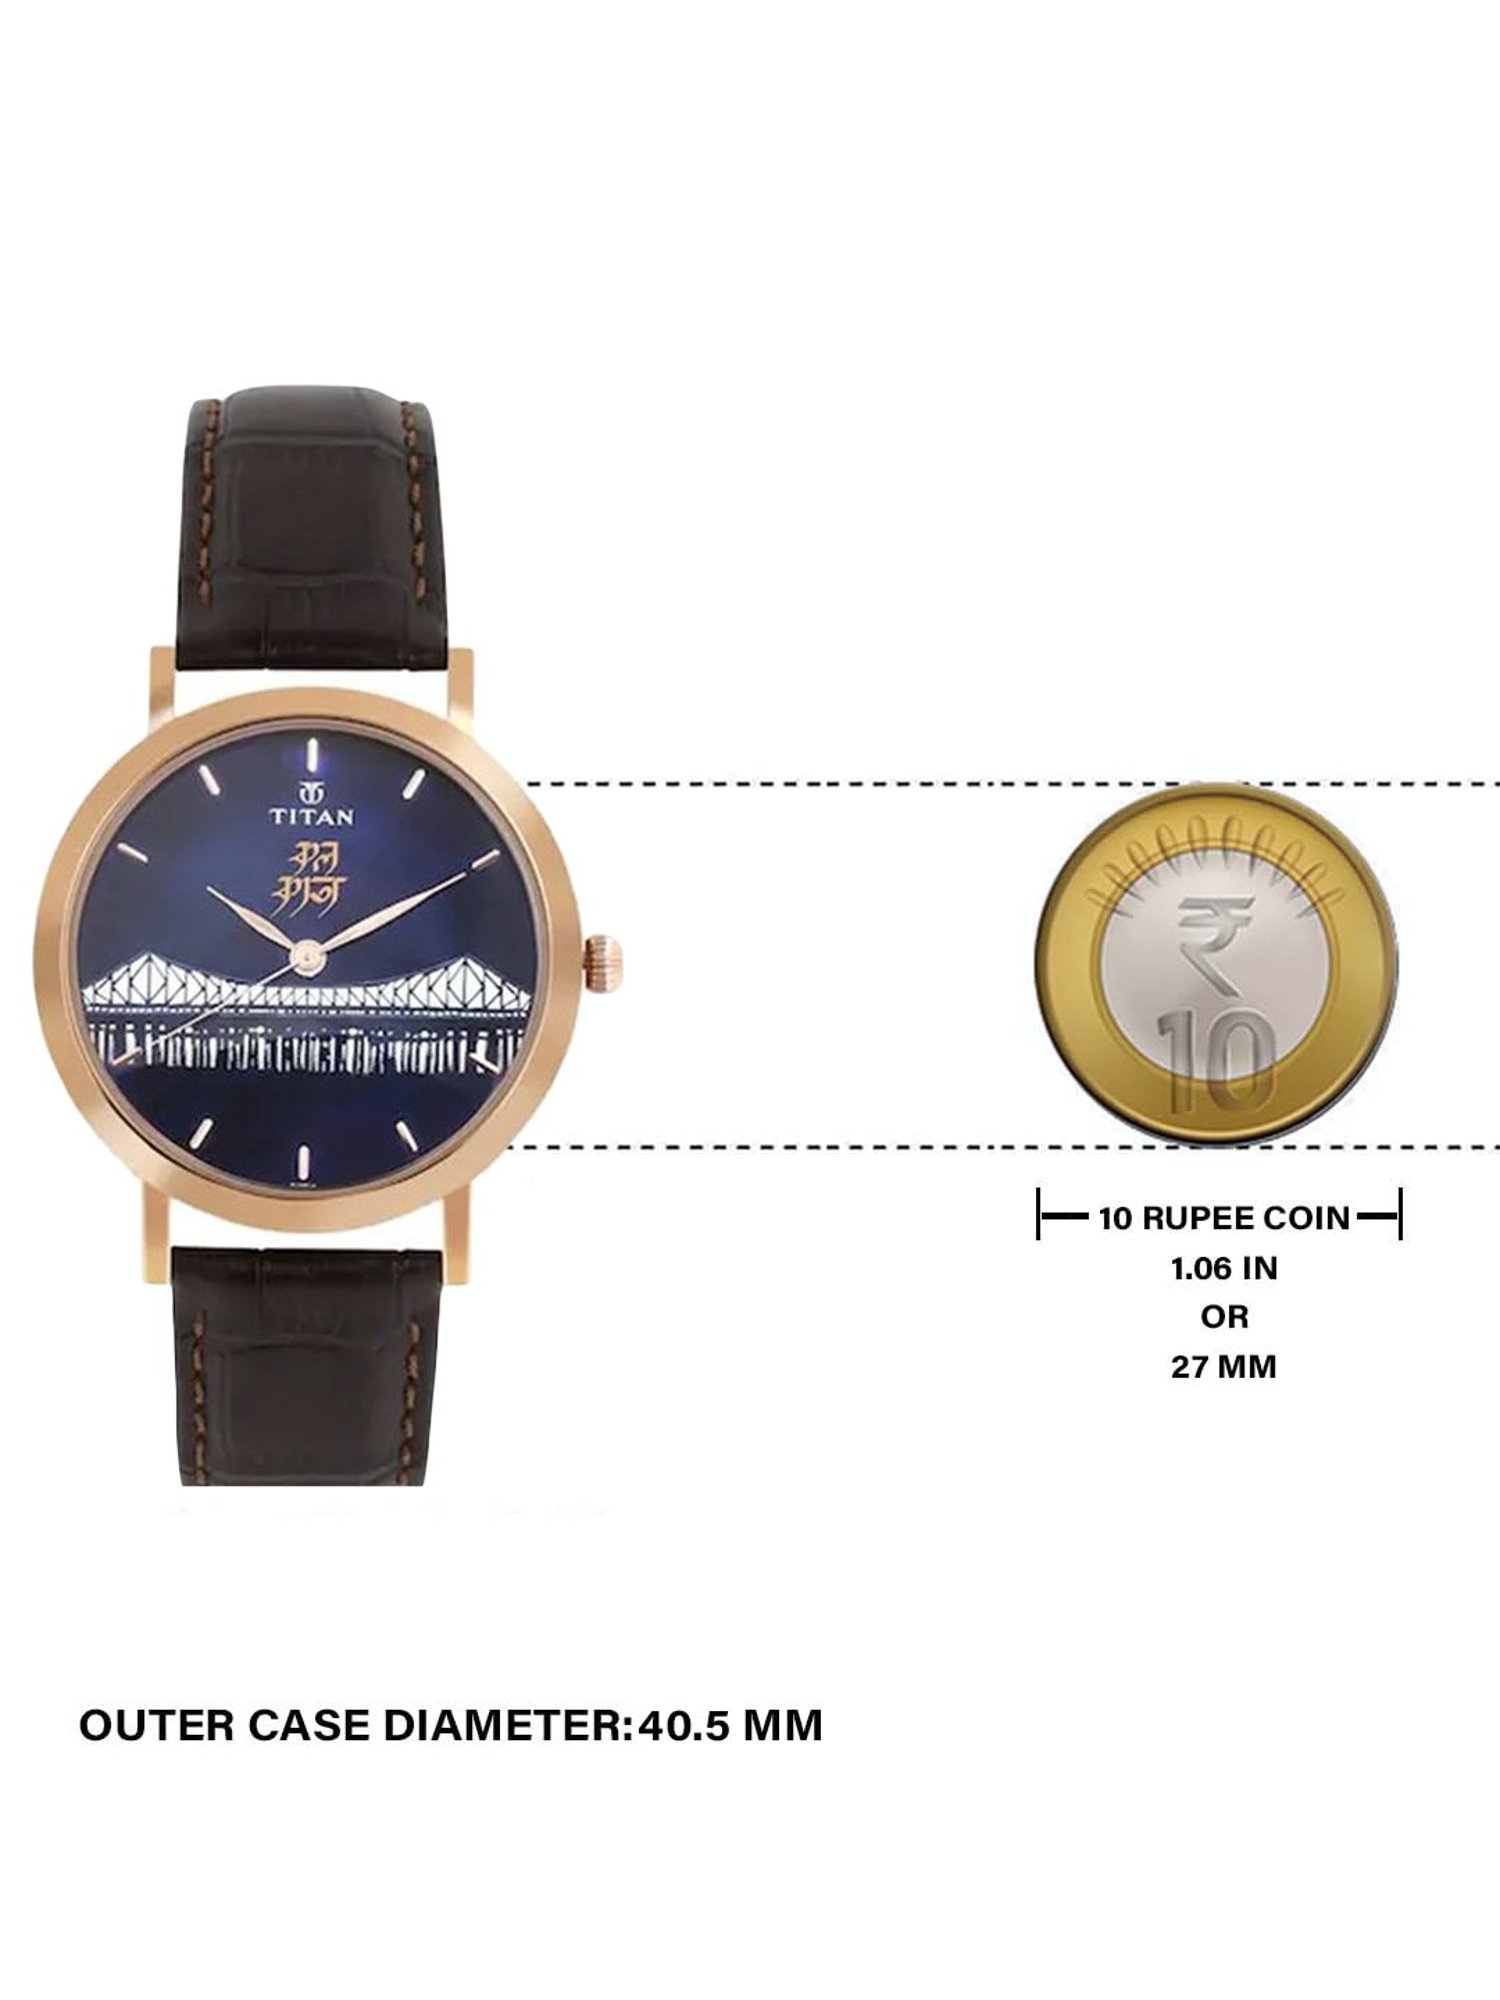 Premium Watch Collection At Cheapest Price | Wrist Watch Wholesale Store  Kolkata | Sonata, Titan Etc - YouTube